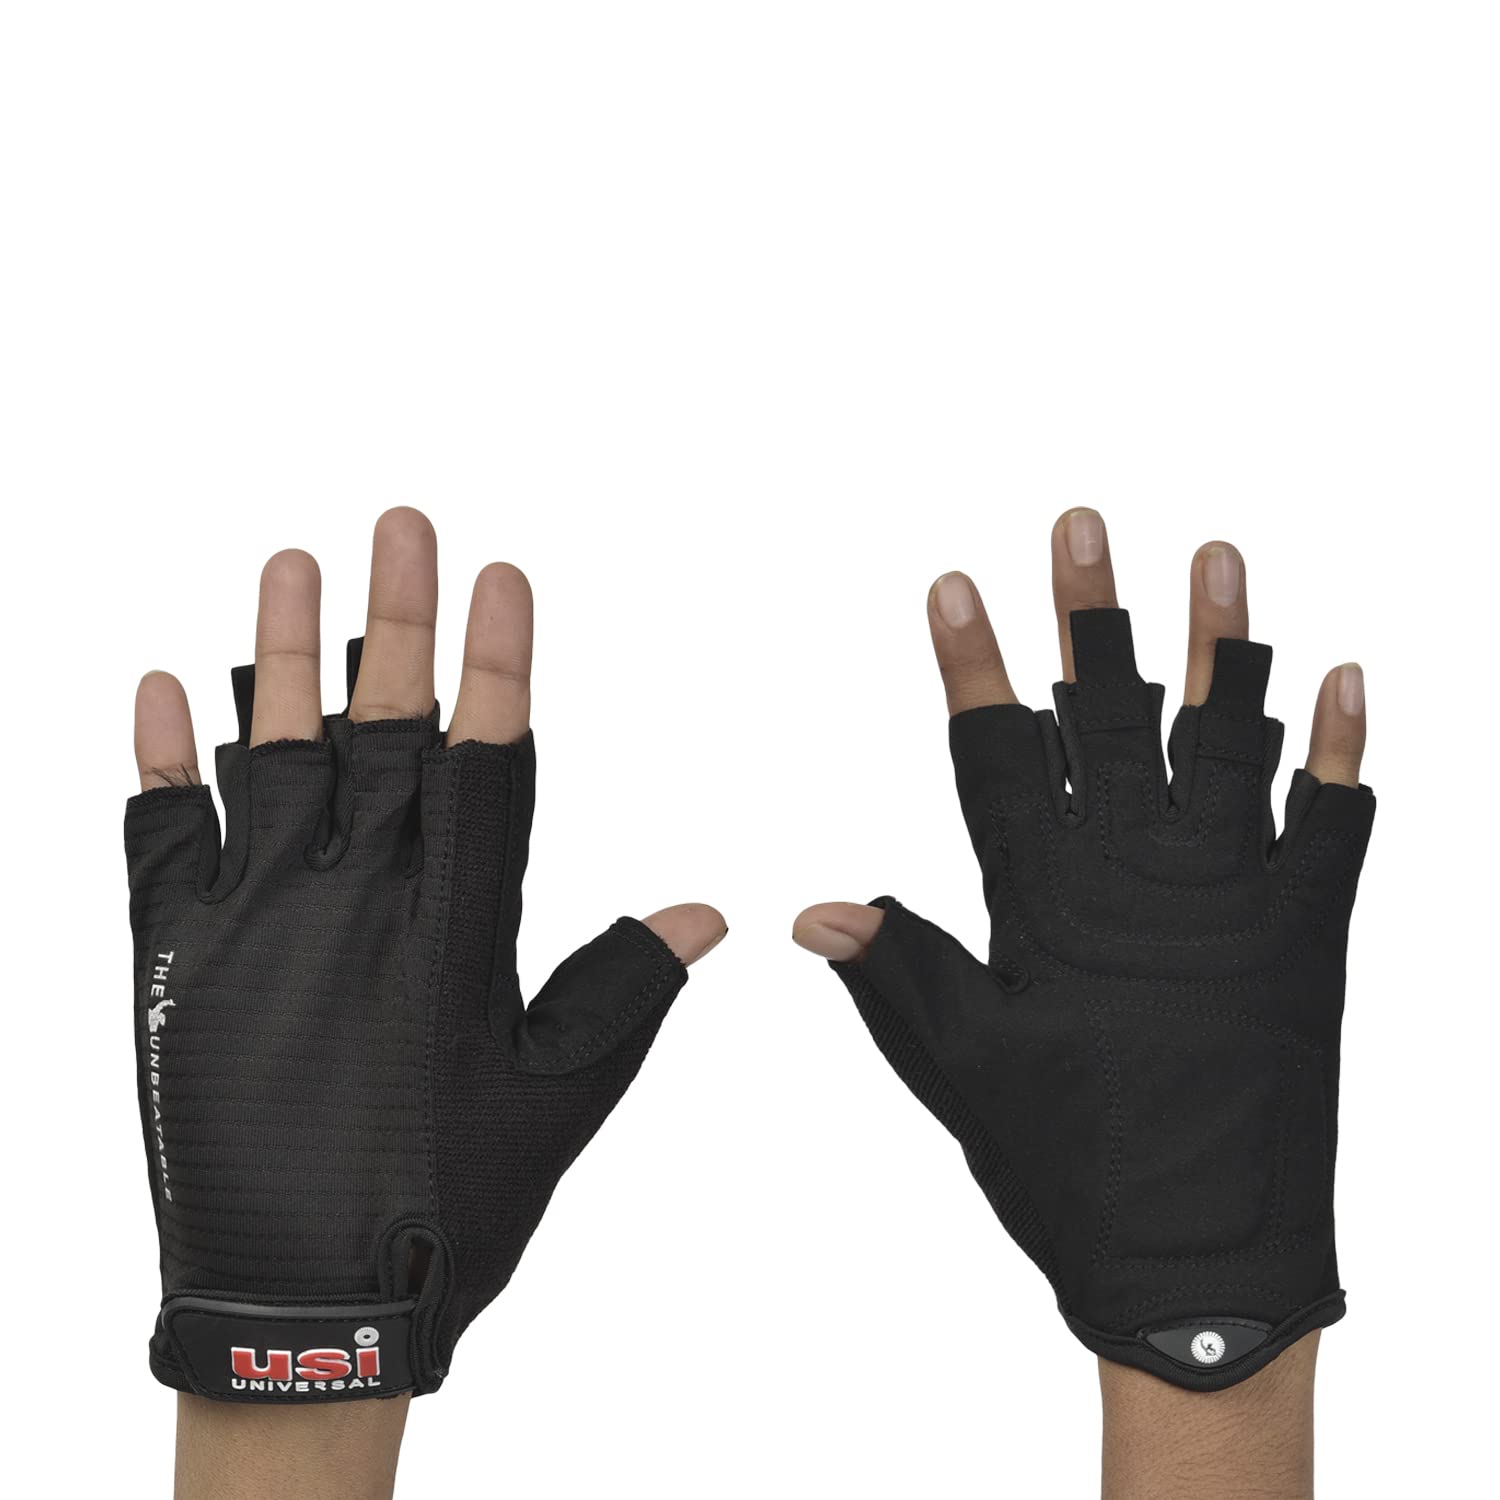 Universal Assault Fitness Gloves (No return no exchange)